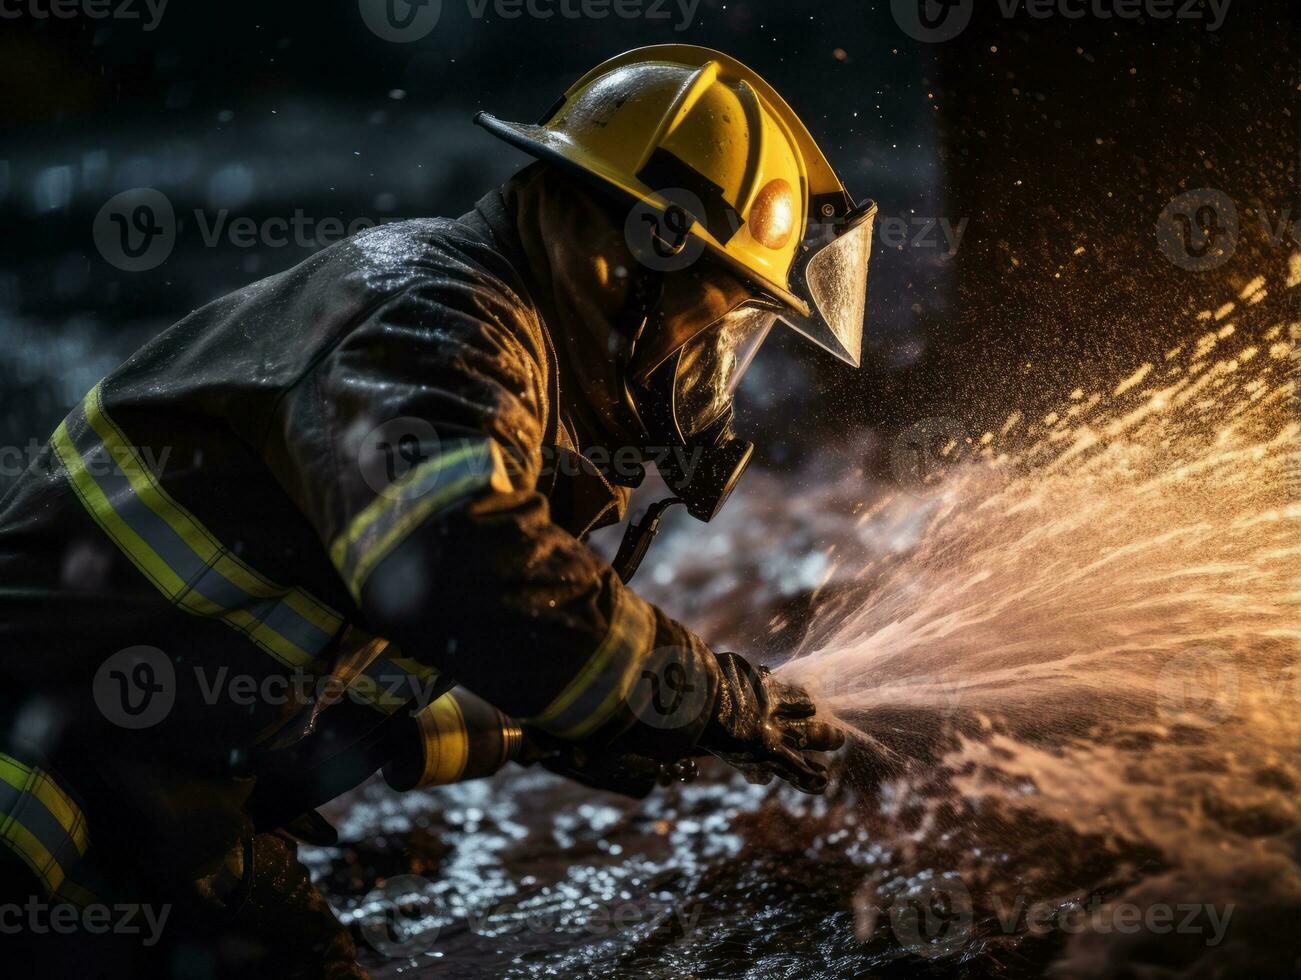 valiente masculino bombero sin miedo confronta el flameante infierno ai generativo foto